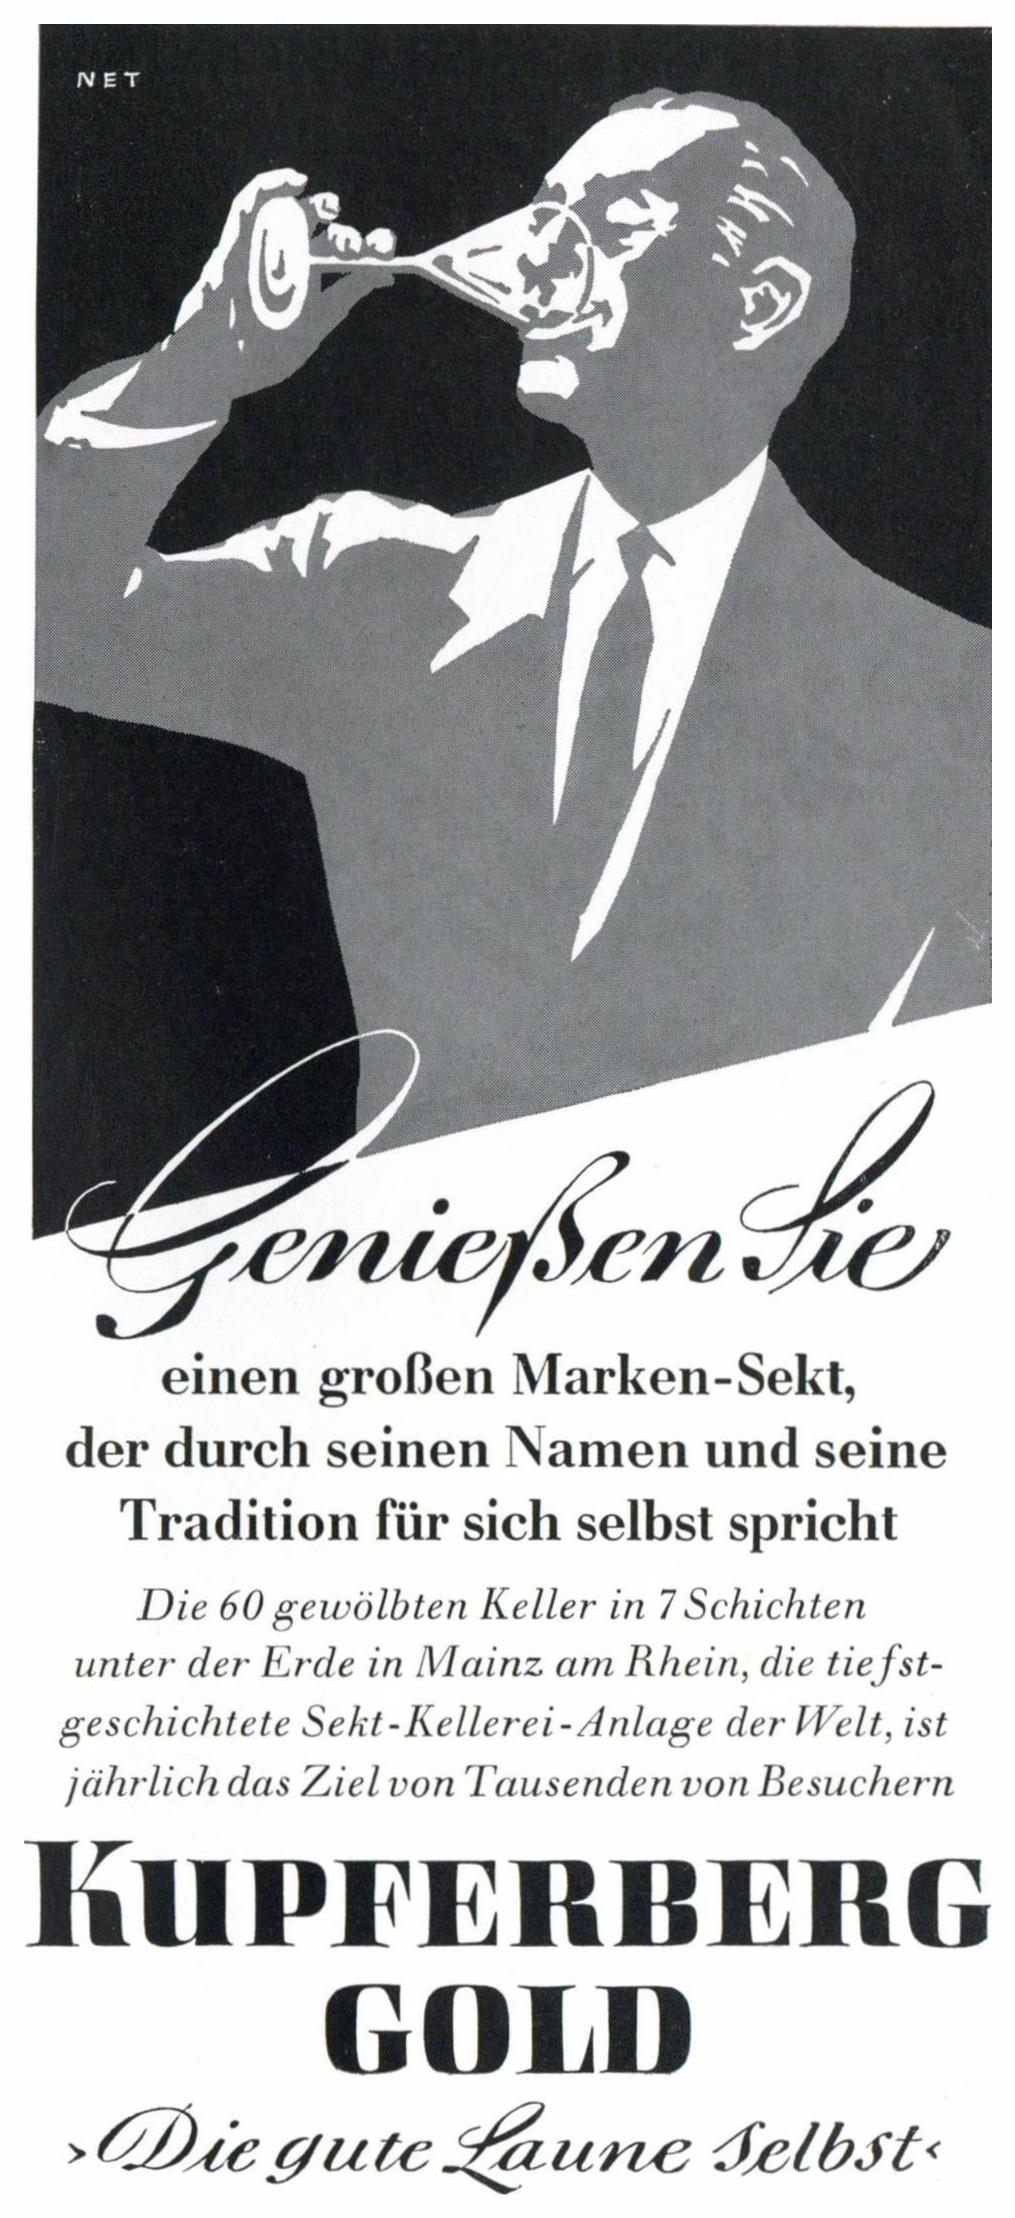 Kupferberg 1960 0.jpg